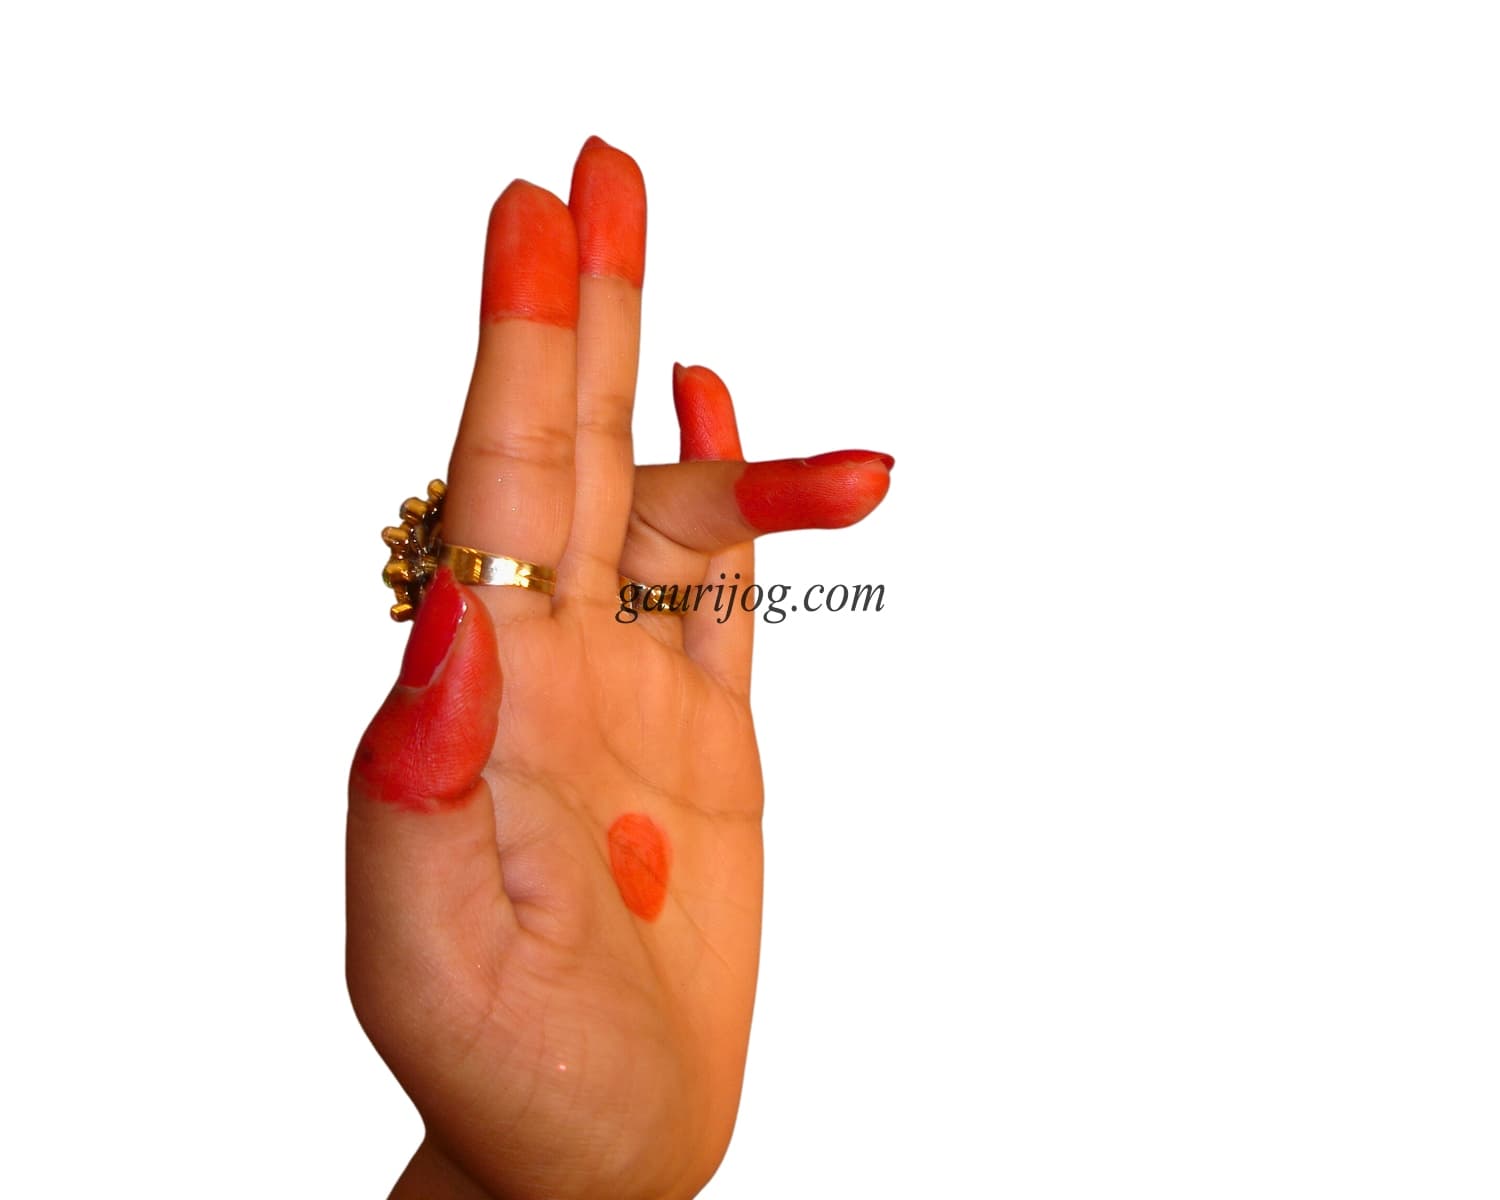 TriPataka Hand Gesture by Gauri Jog